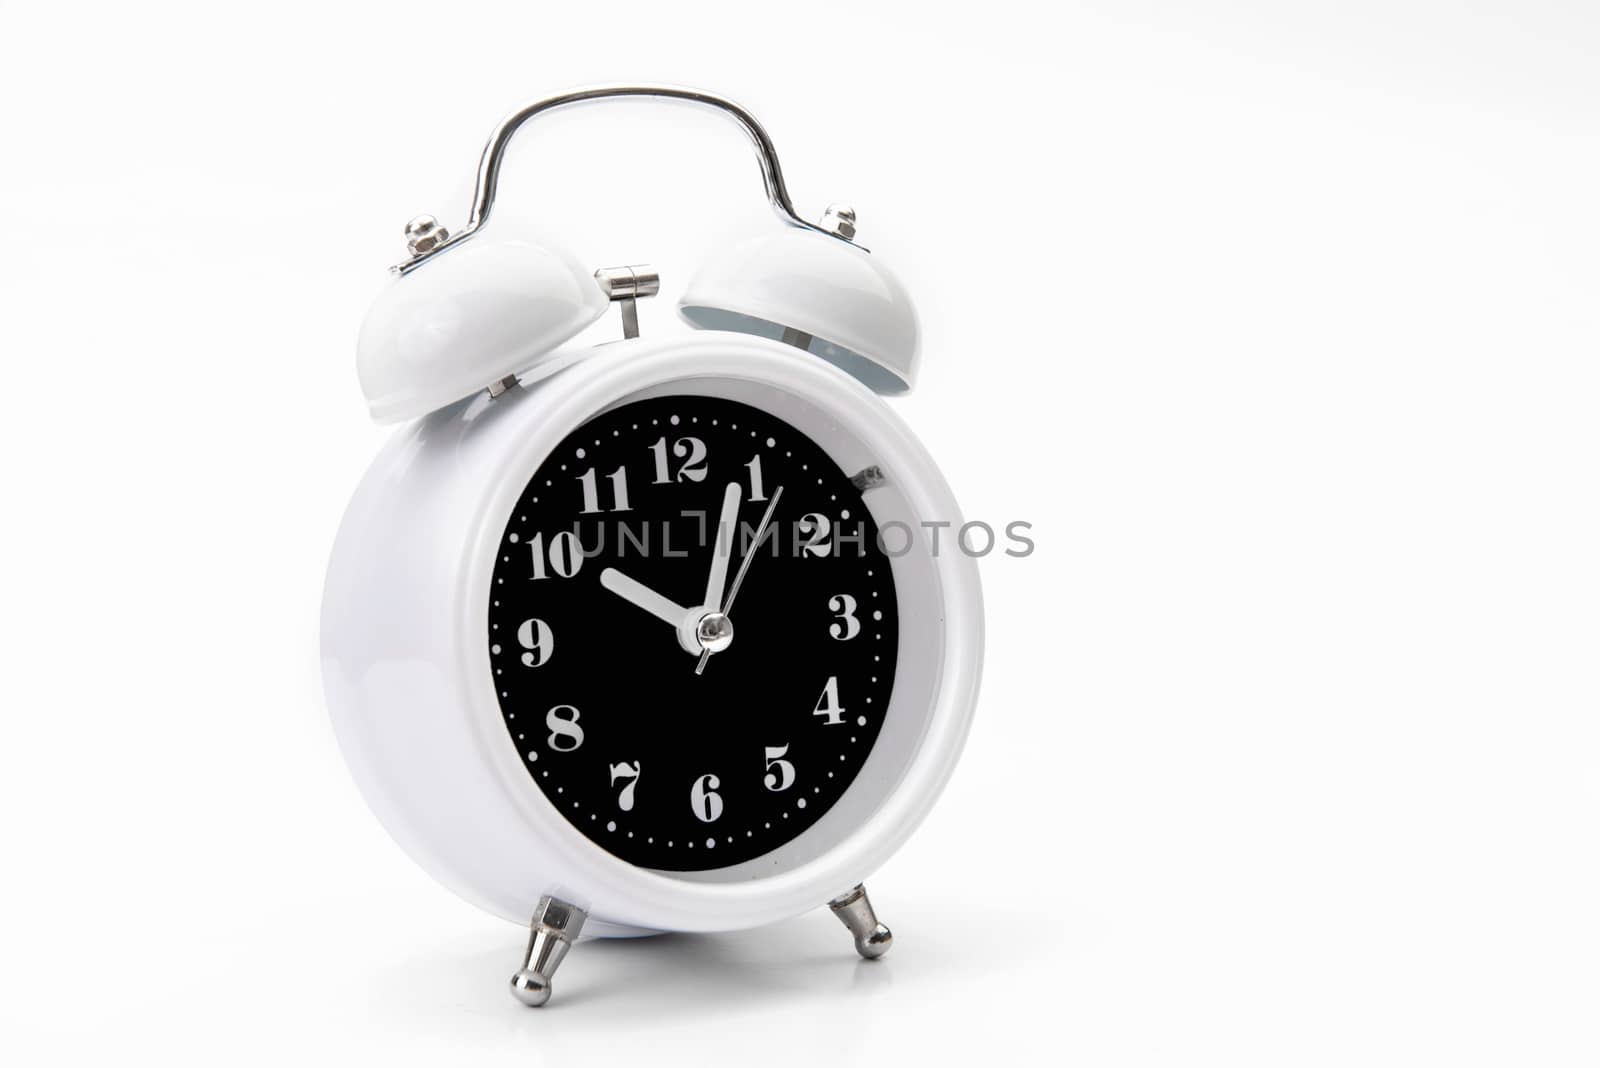 Retro alarm clock isolate on white backgound.